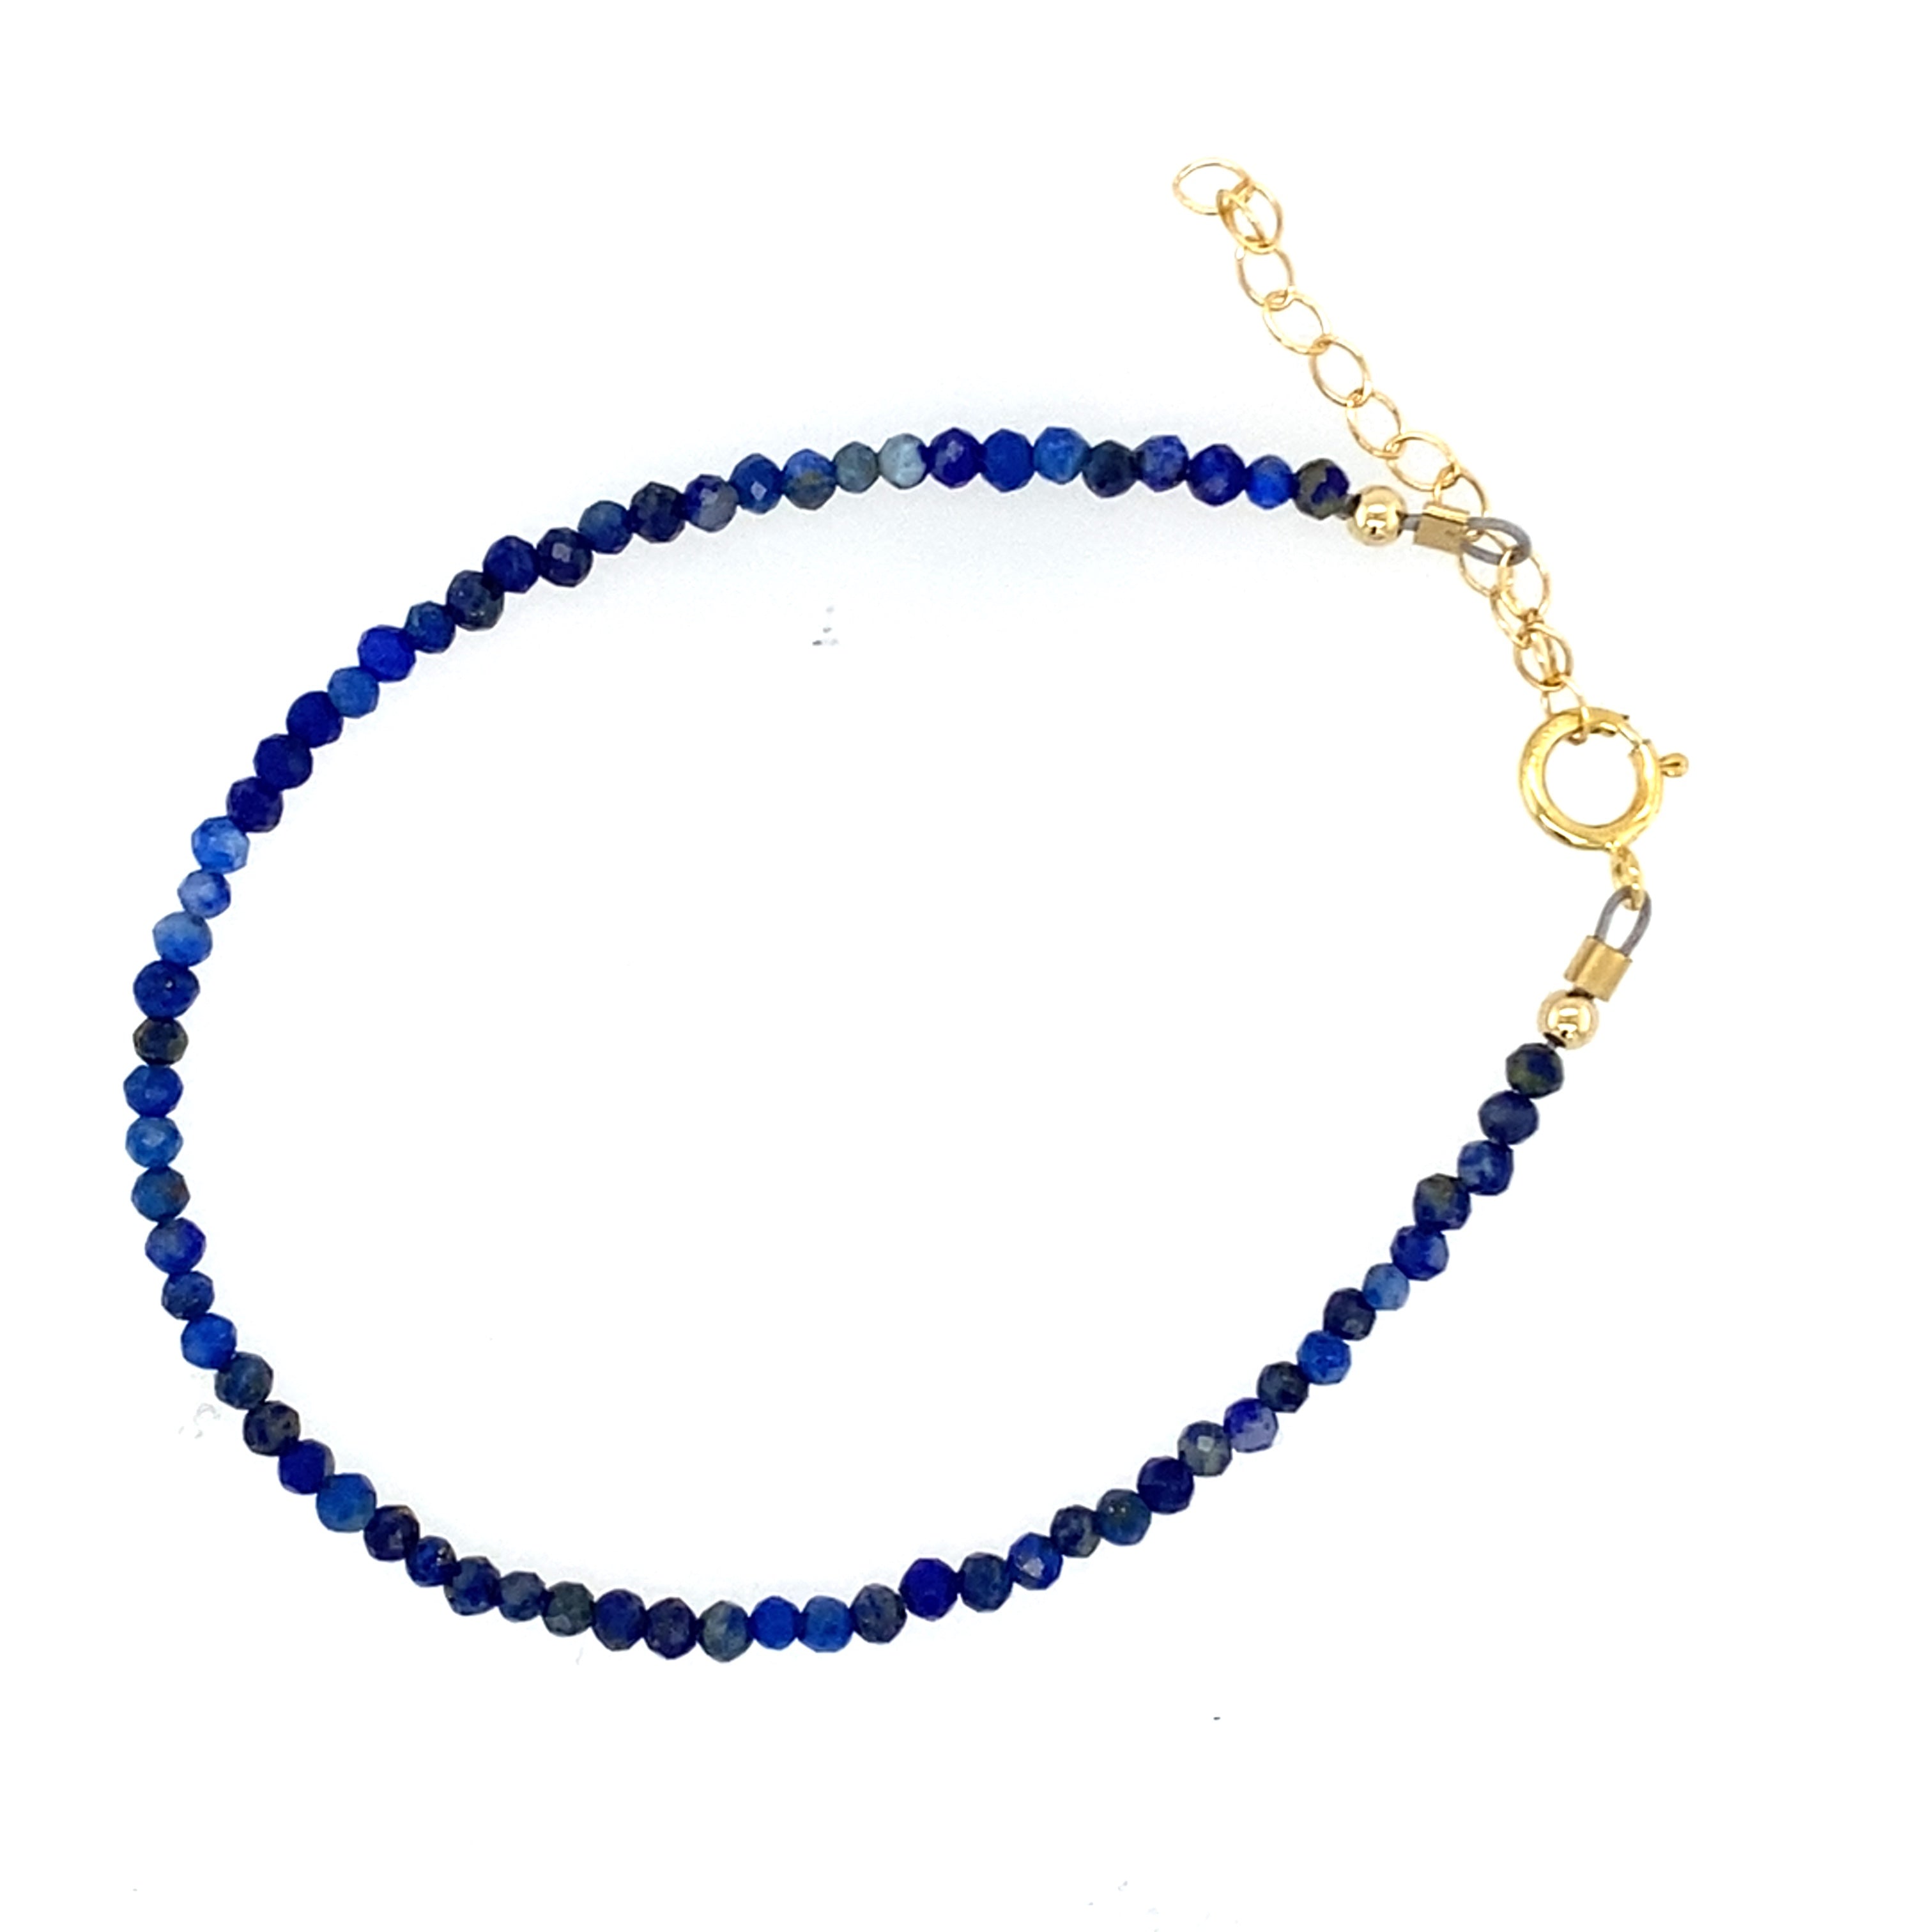 Le petite Lapis Lazuli - geboortesteen armband - september